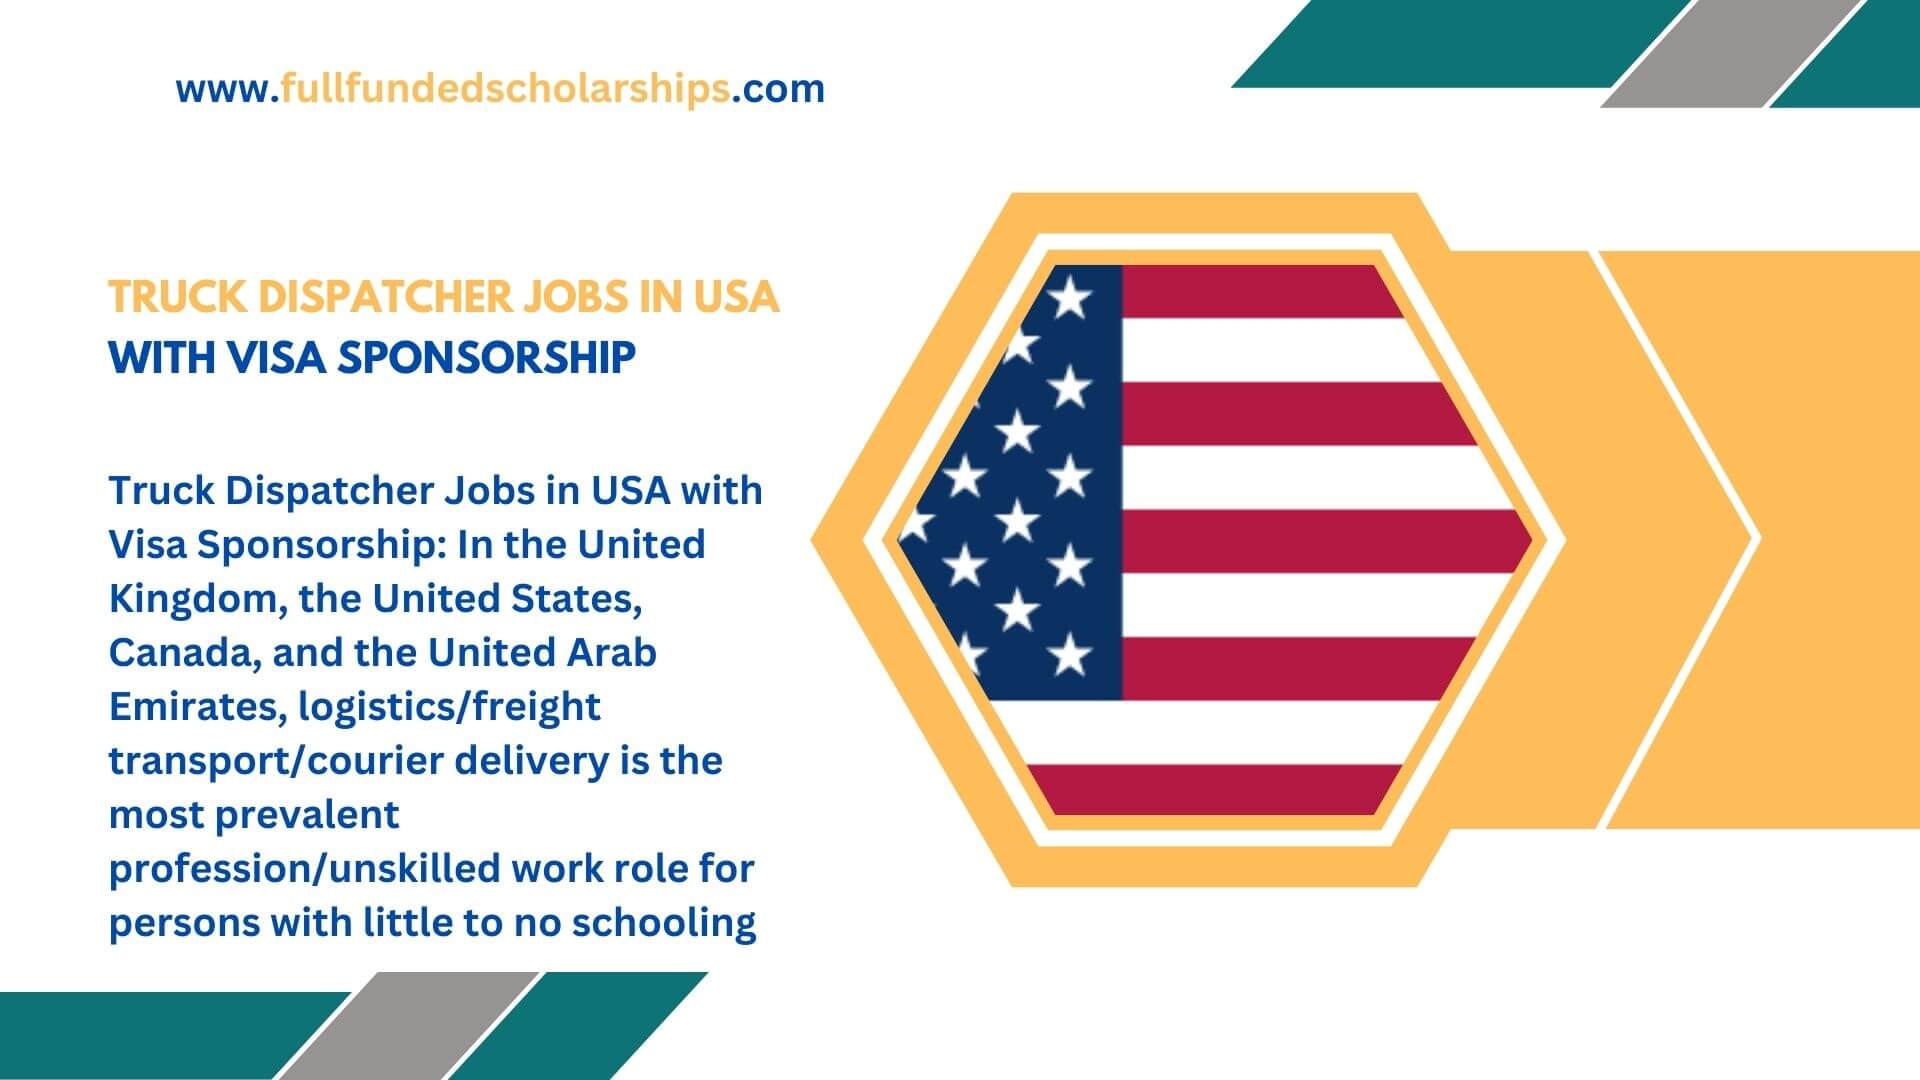 Truck Dispatcher Jobs in USA with Visa Sponsorship